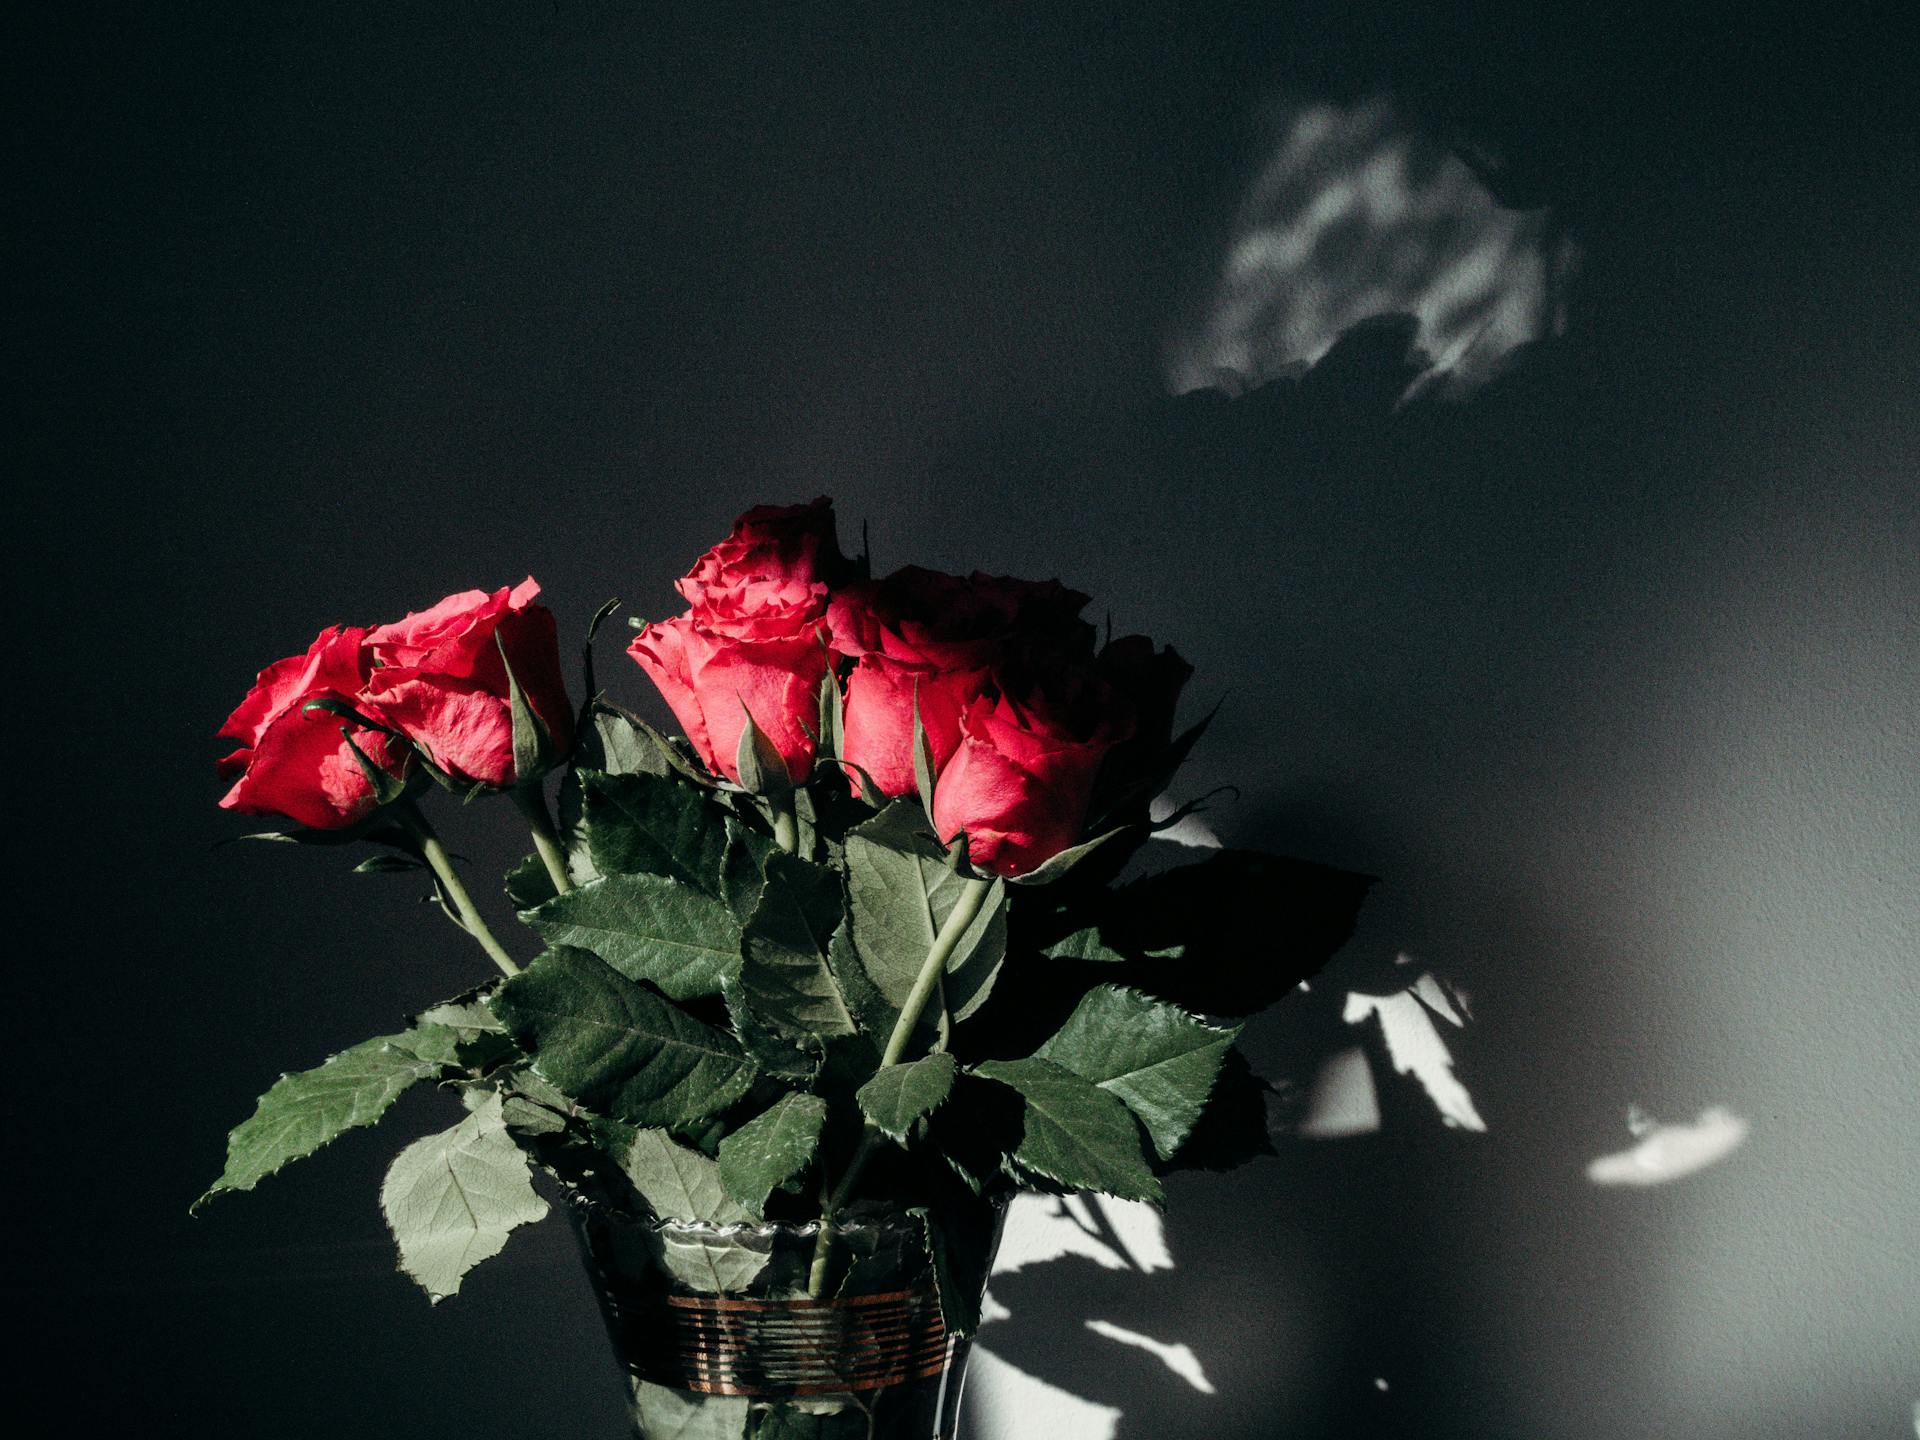 Red roses in a vase | Source: Pexels